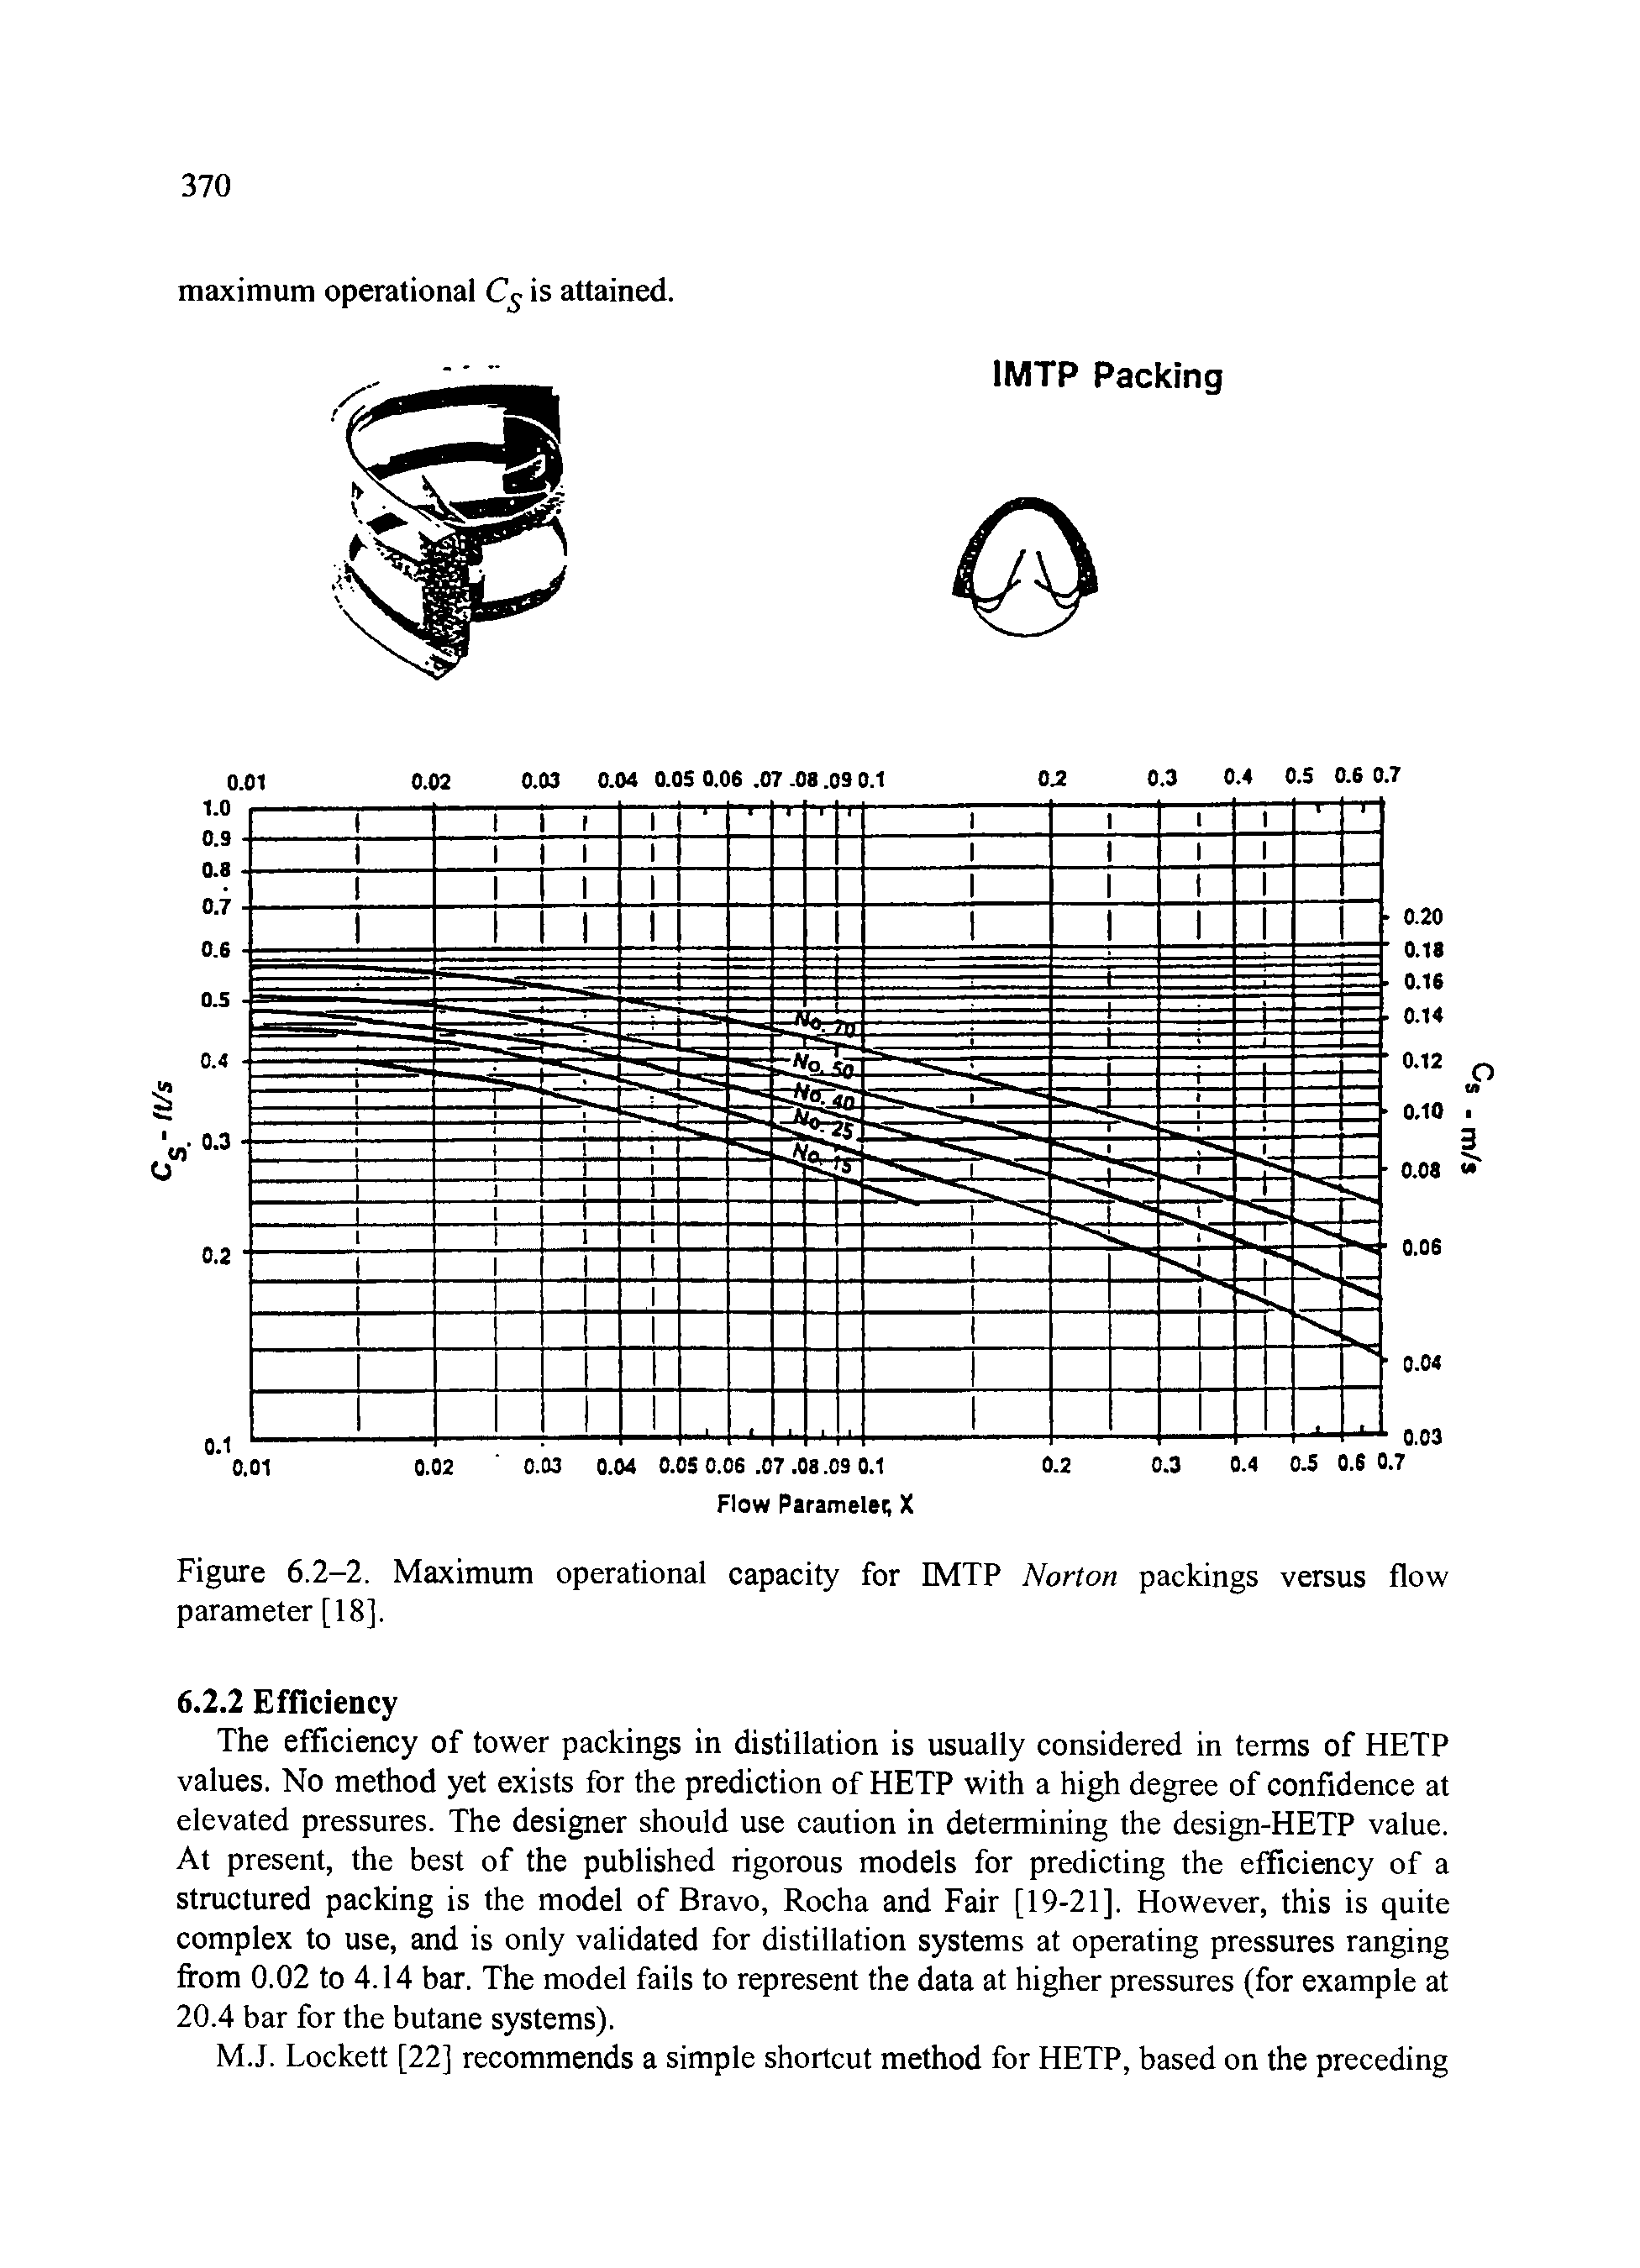 Figure 6.2-2. Maximum operational capacity for IMTP Norton packings versus flow parameter [18].